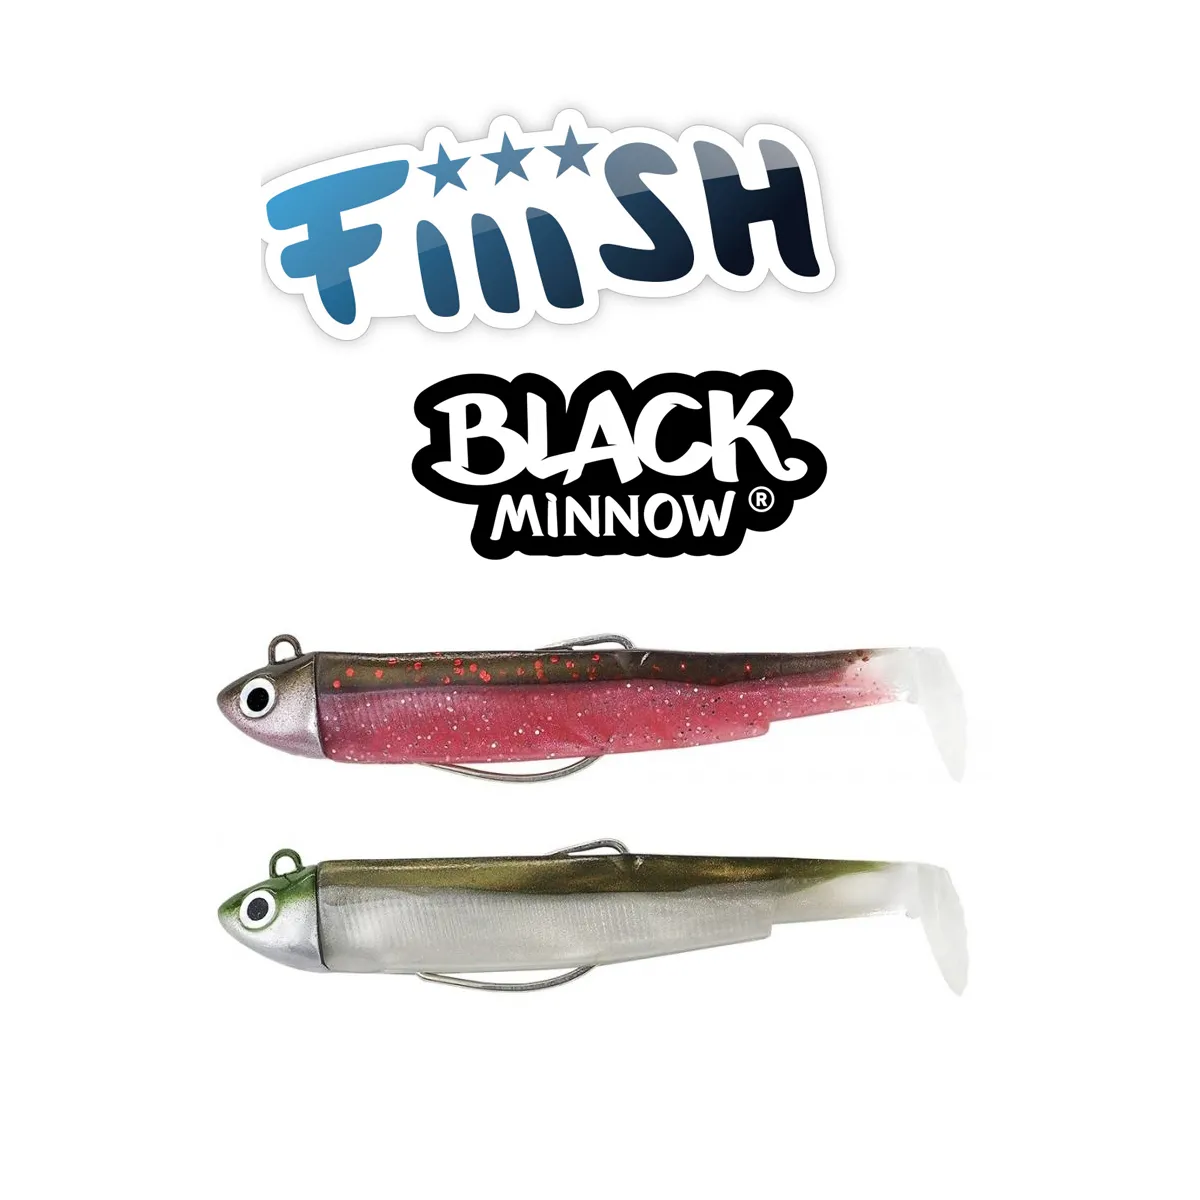 Fiiish Black Minnow No1 Double Combo - 7 cm, 3g 8